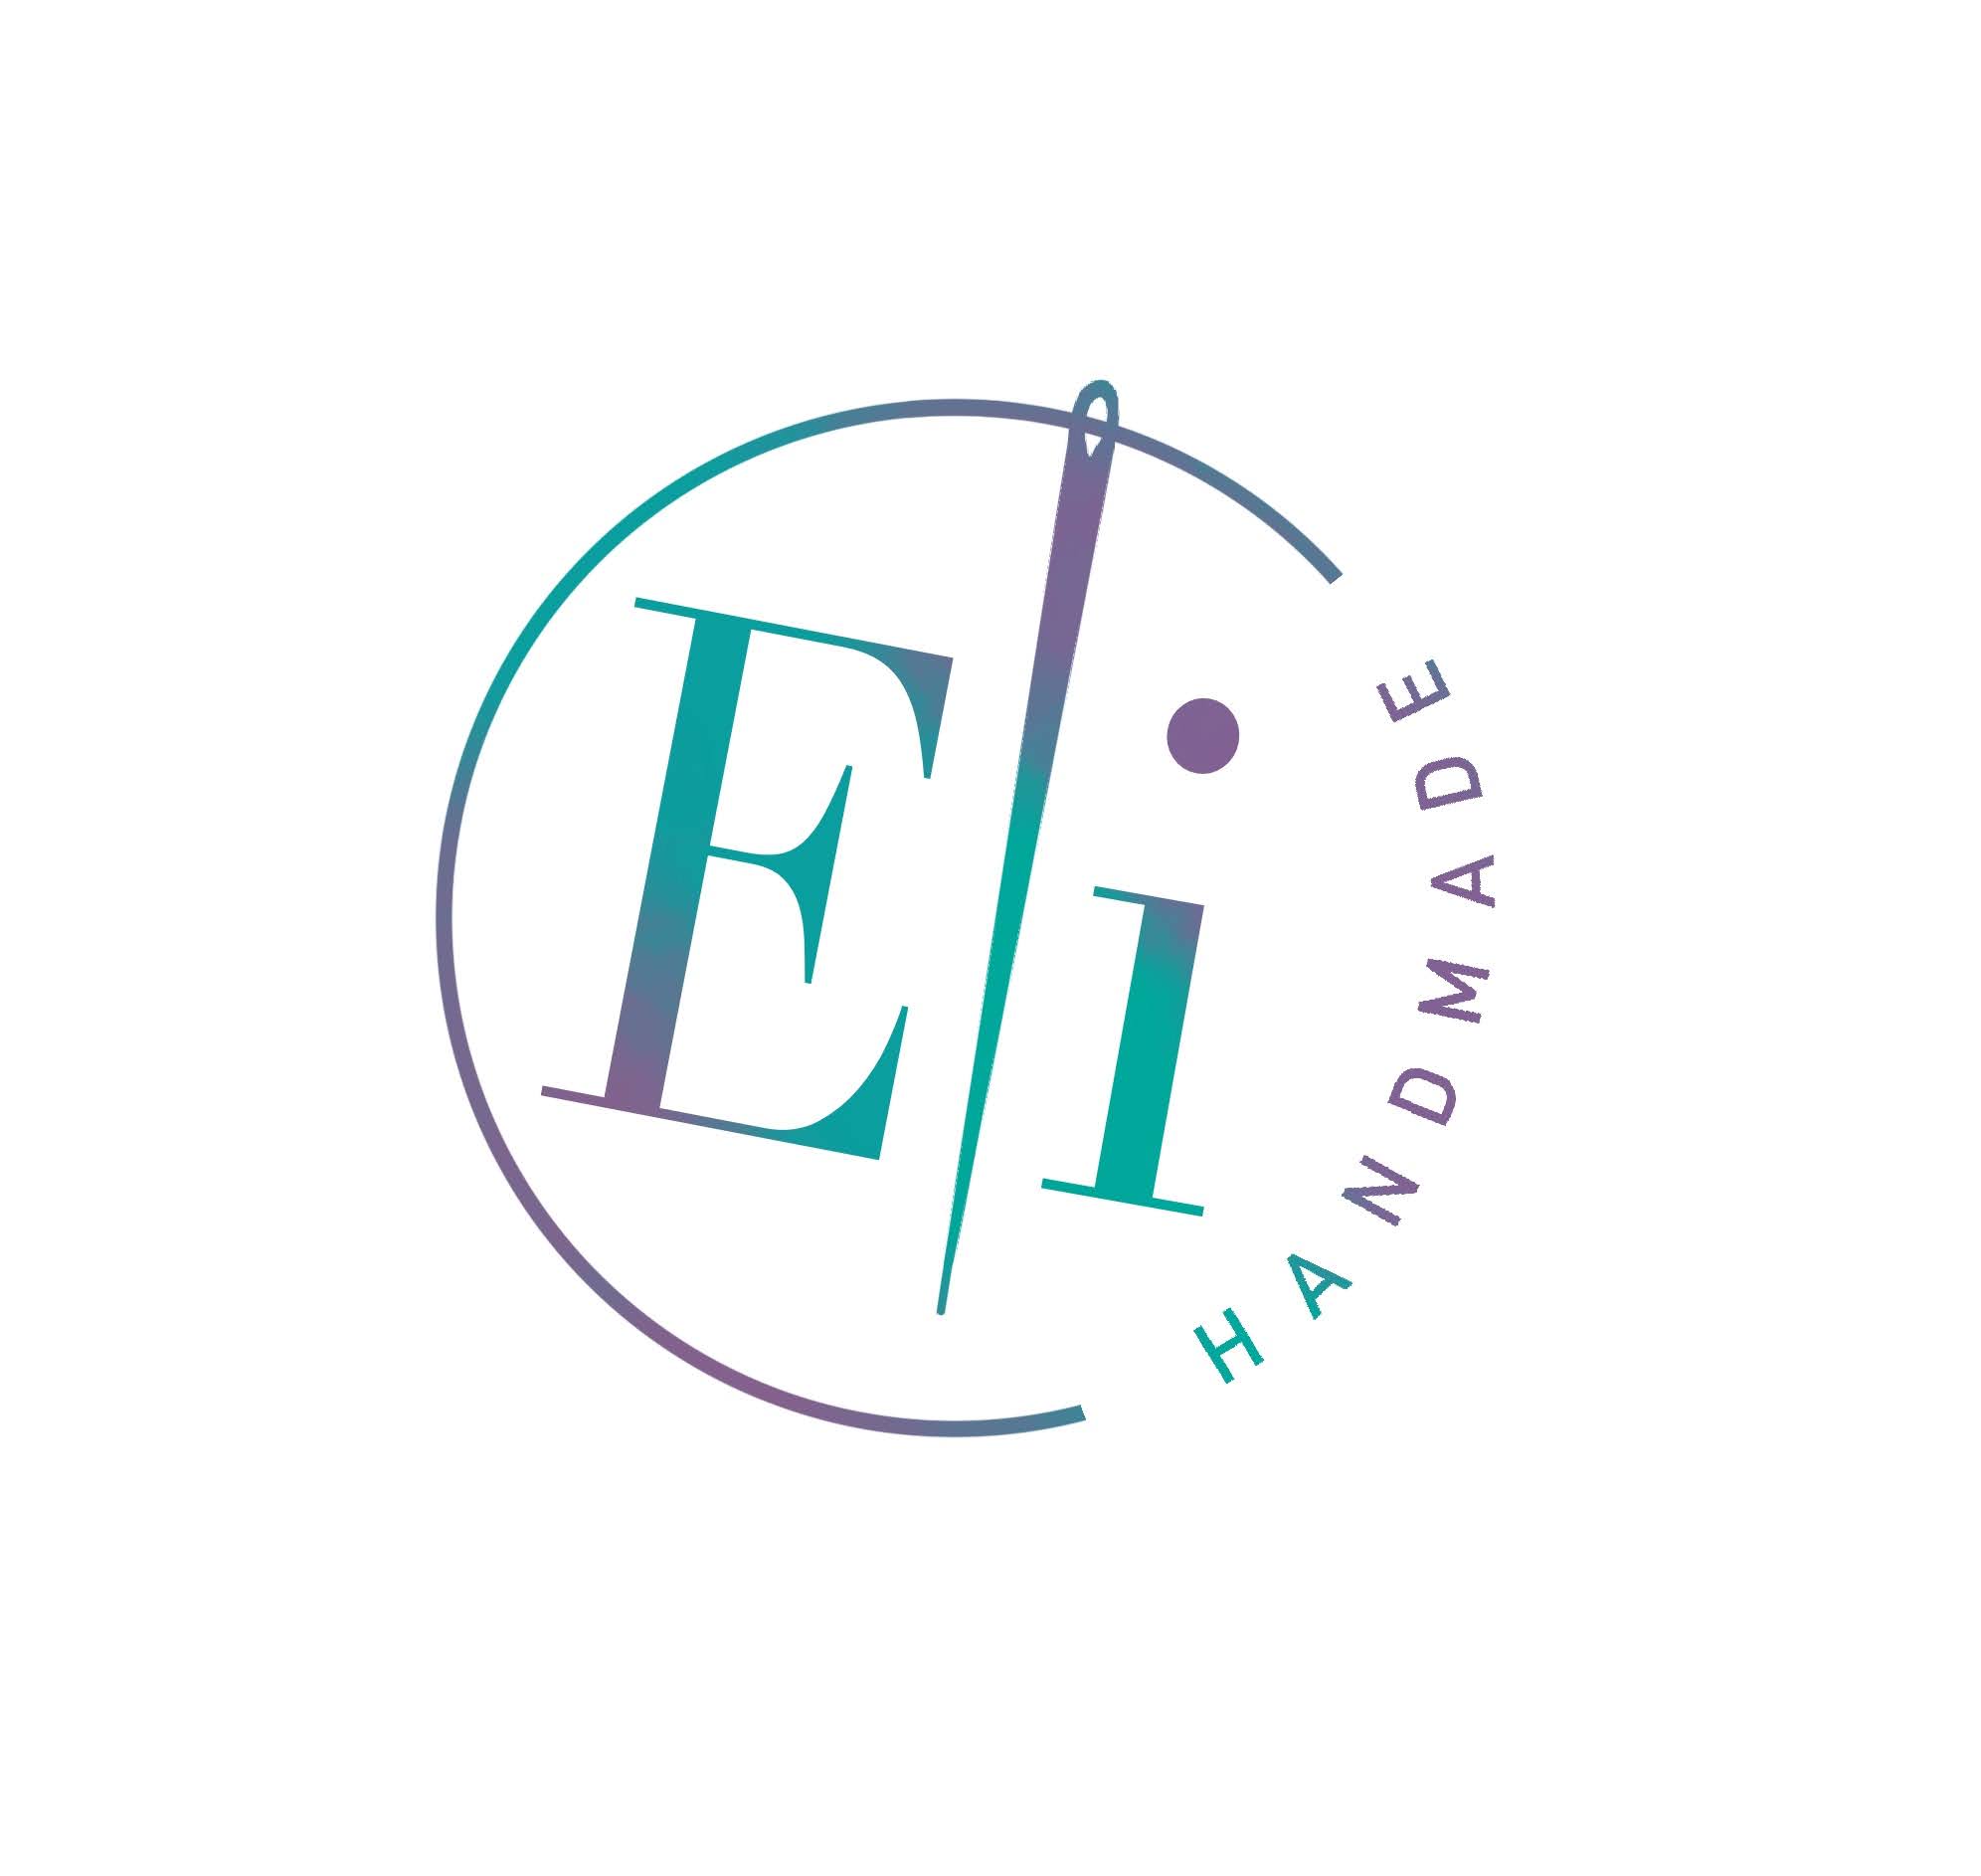 Eli handmade logo